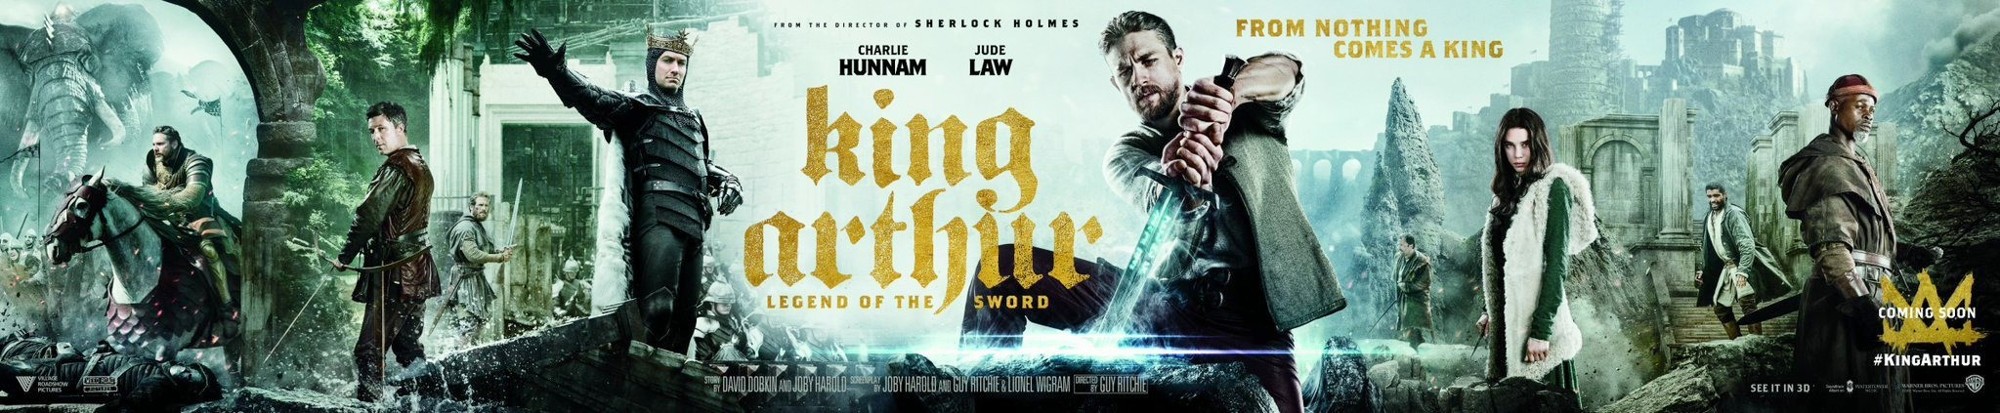 King Arthur Legend Of The Sword 2017 Pictures Trailer Reviews